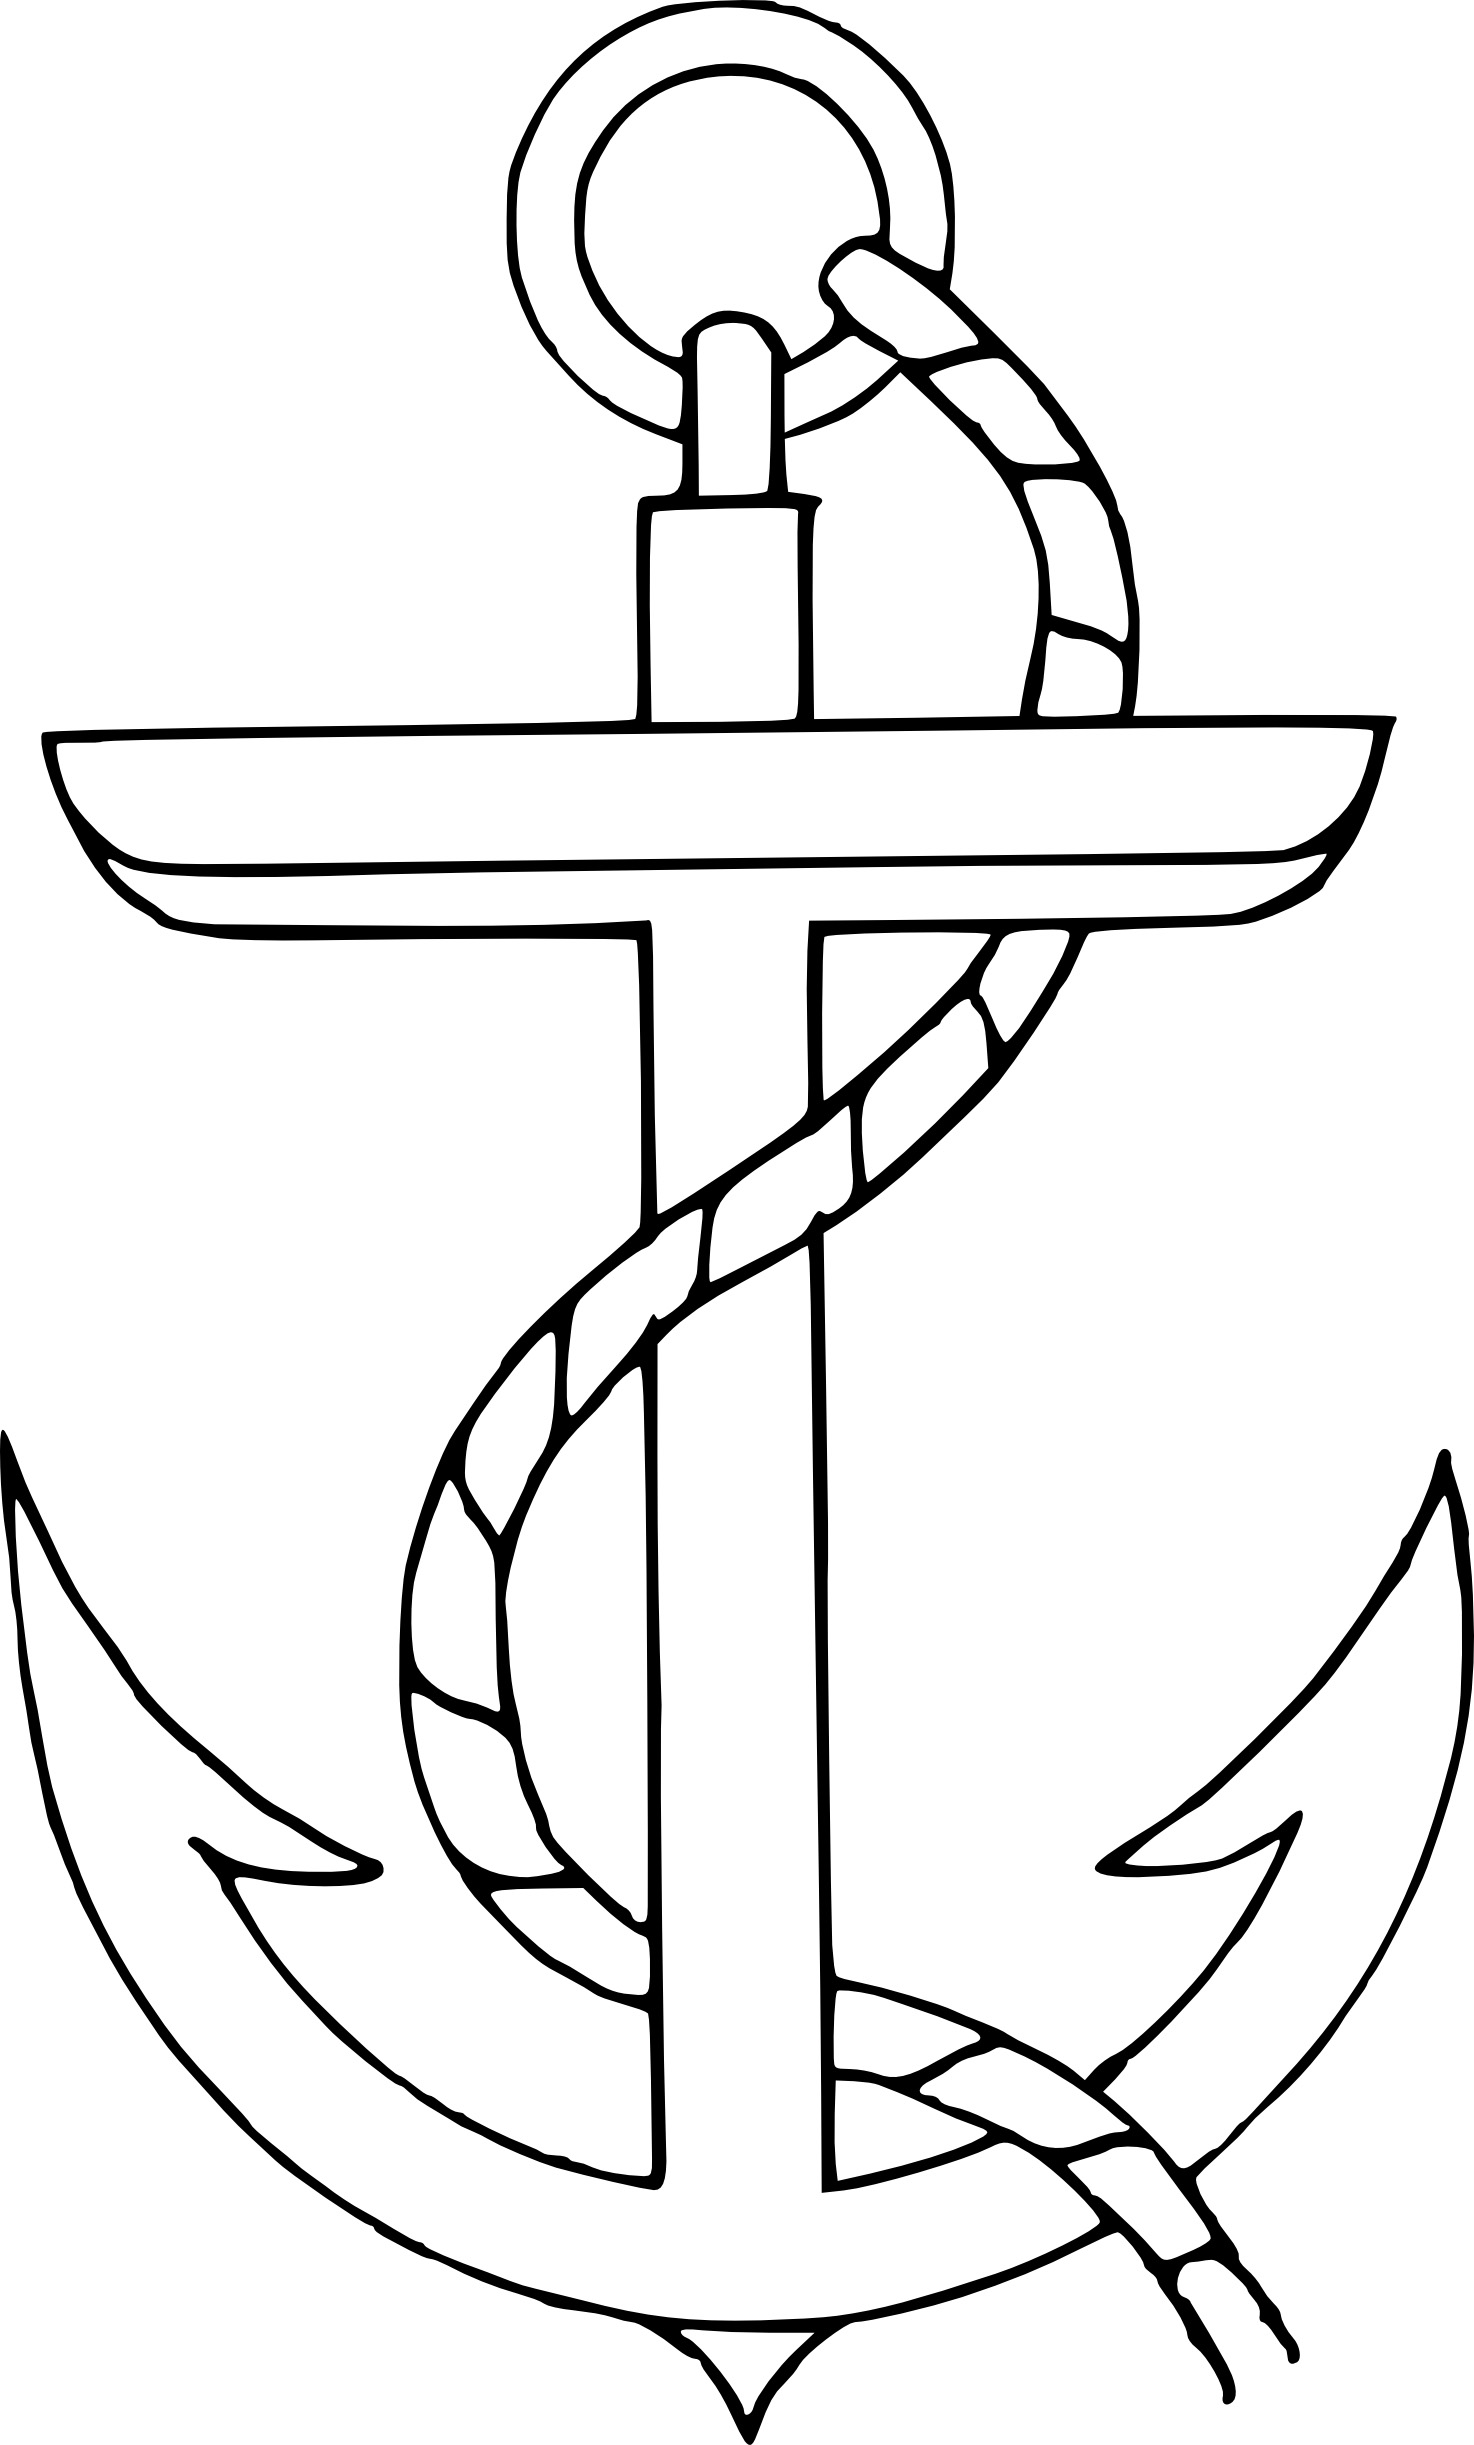 Anchor clipart anchors anchors image 9